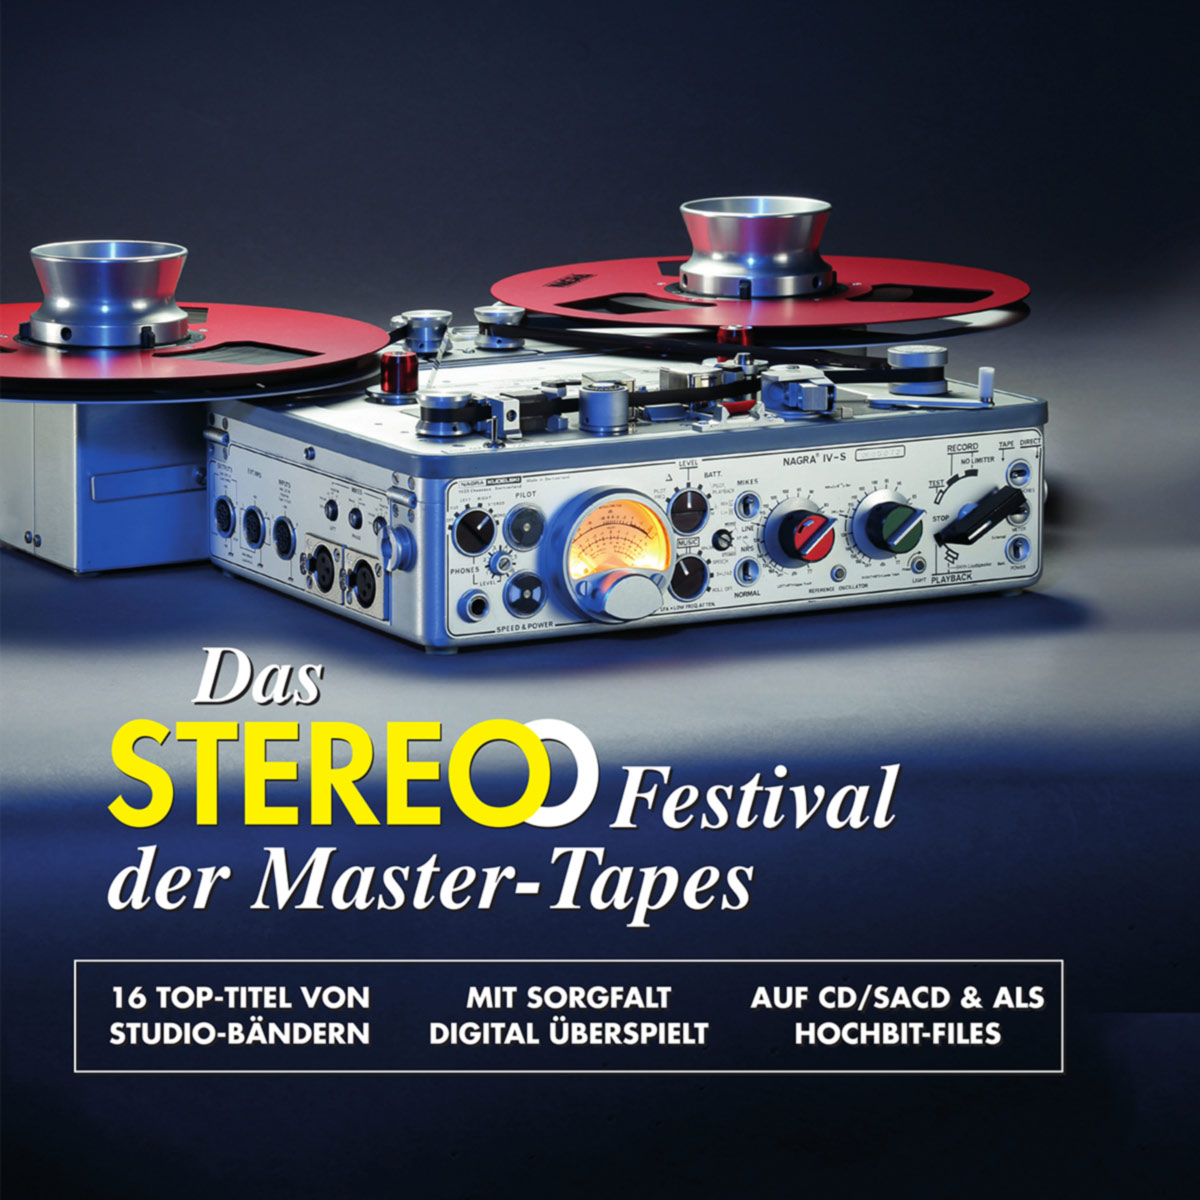 Das STEREO Festival der Master-Tapes